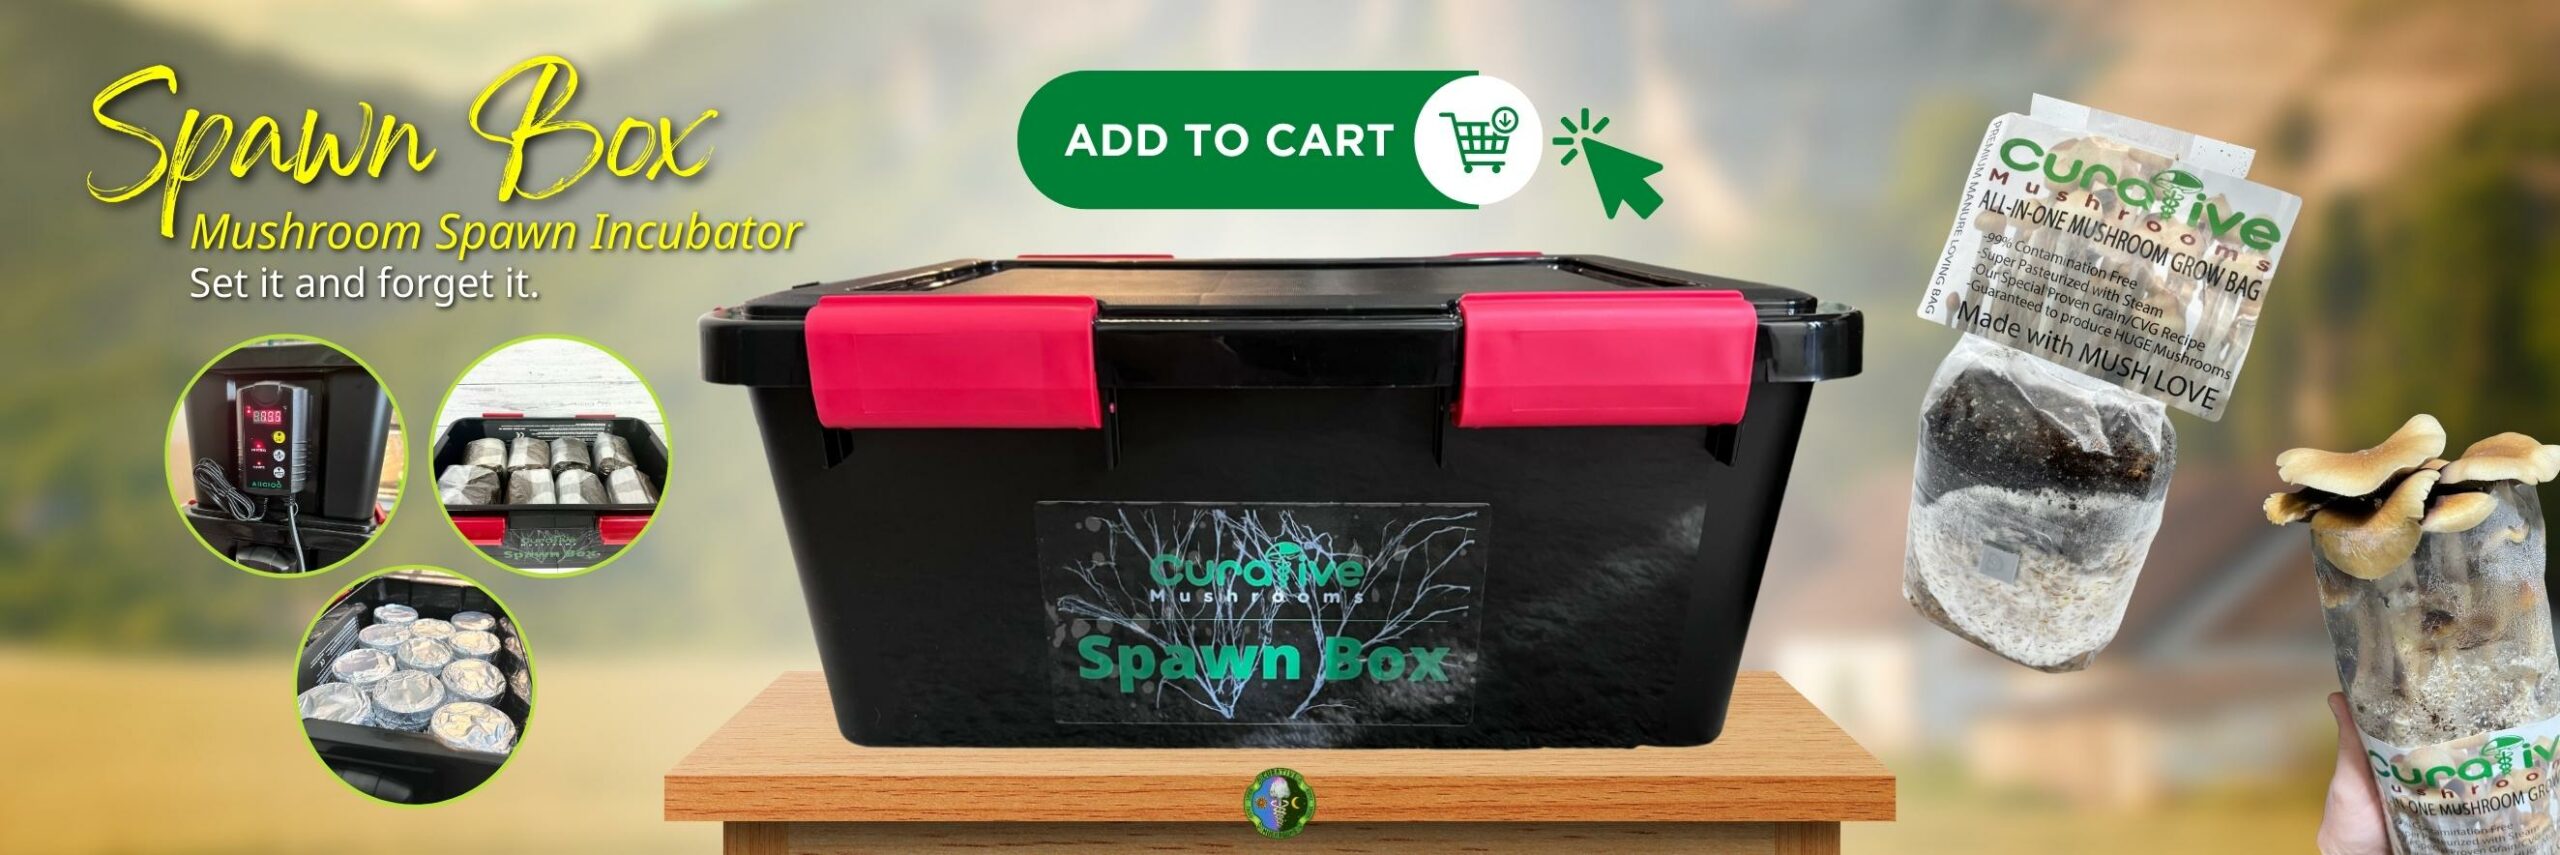 Curative Mushrooms Spawn Box discounted - Mushroom Spawn Incubator - Mushroom Growing Equipment - Add to Cart